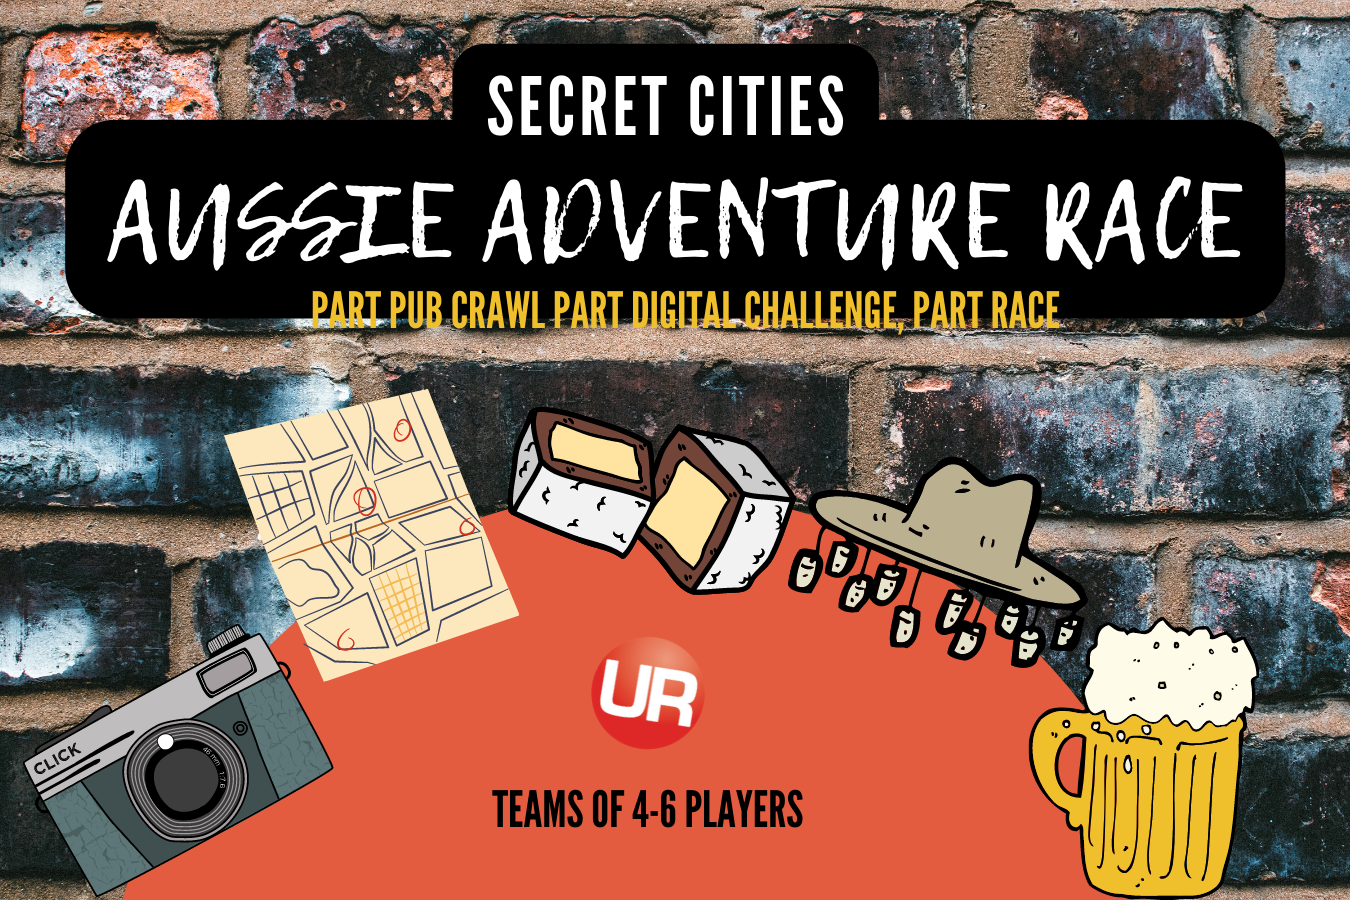 Secret Cities - Aussie Adventure Race